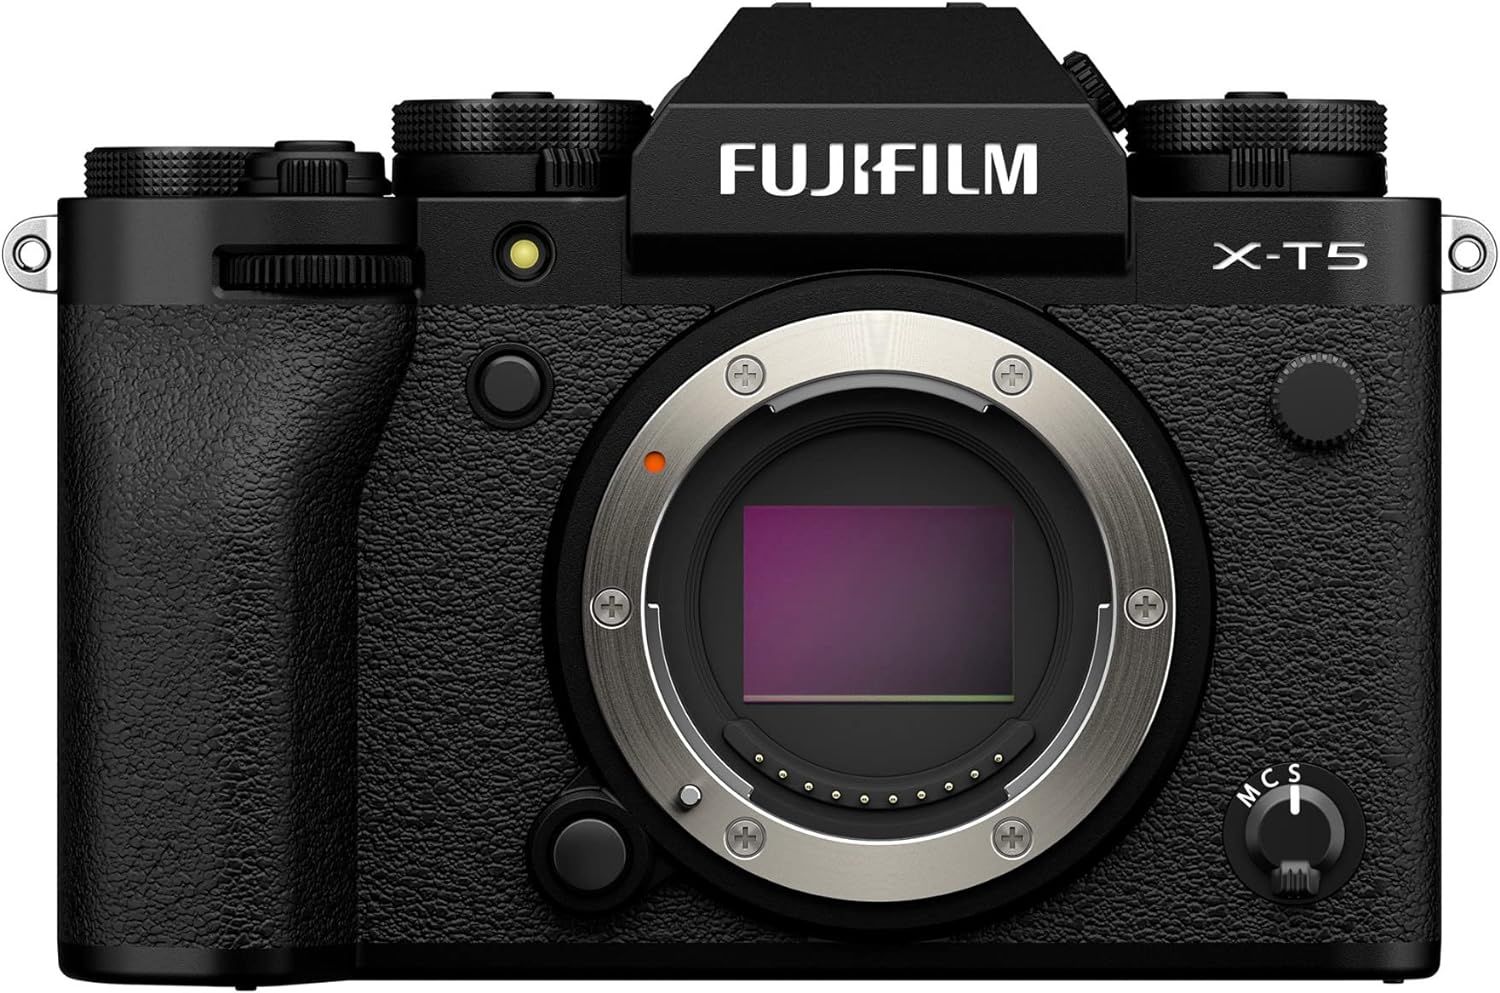 Fujifilm XT5 digital camera